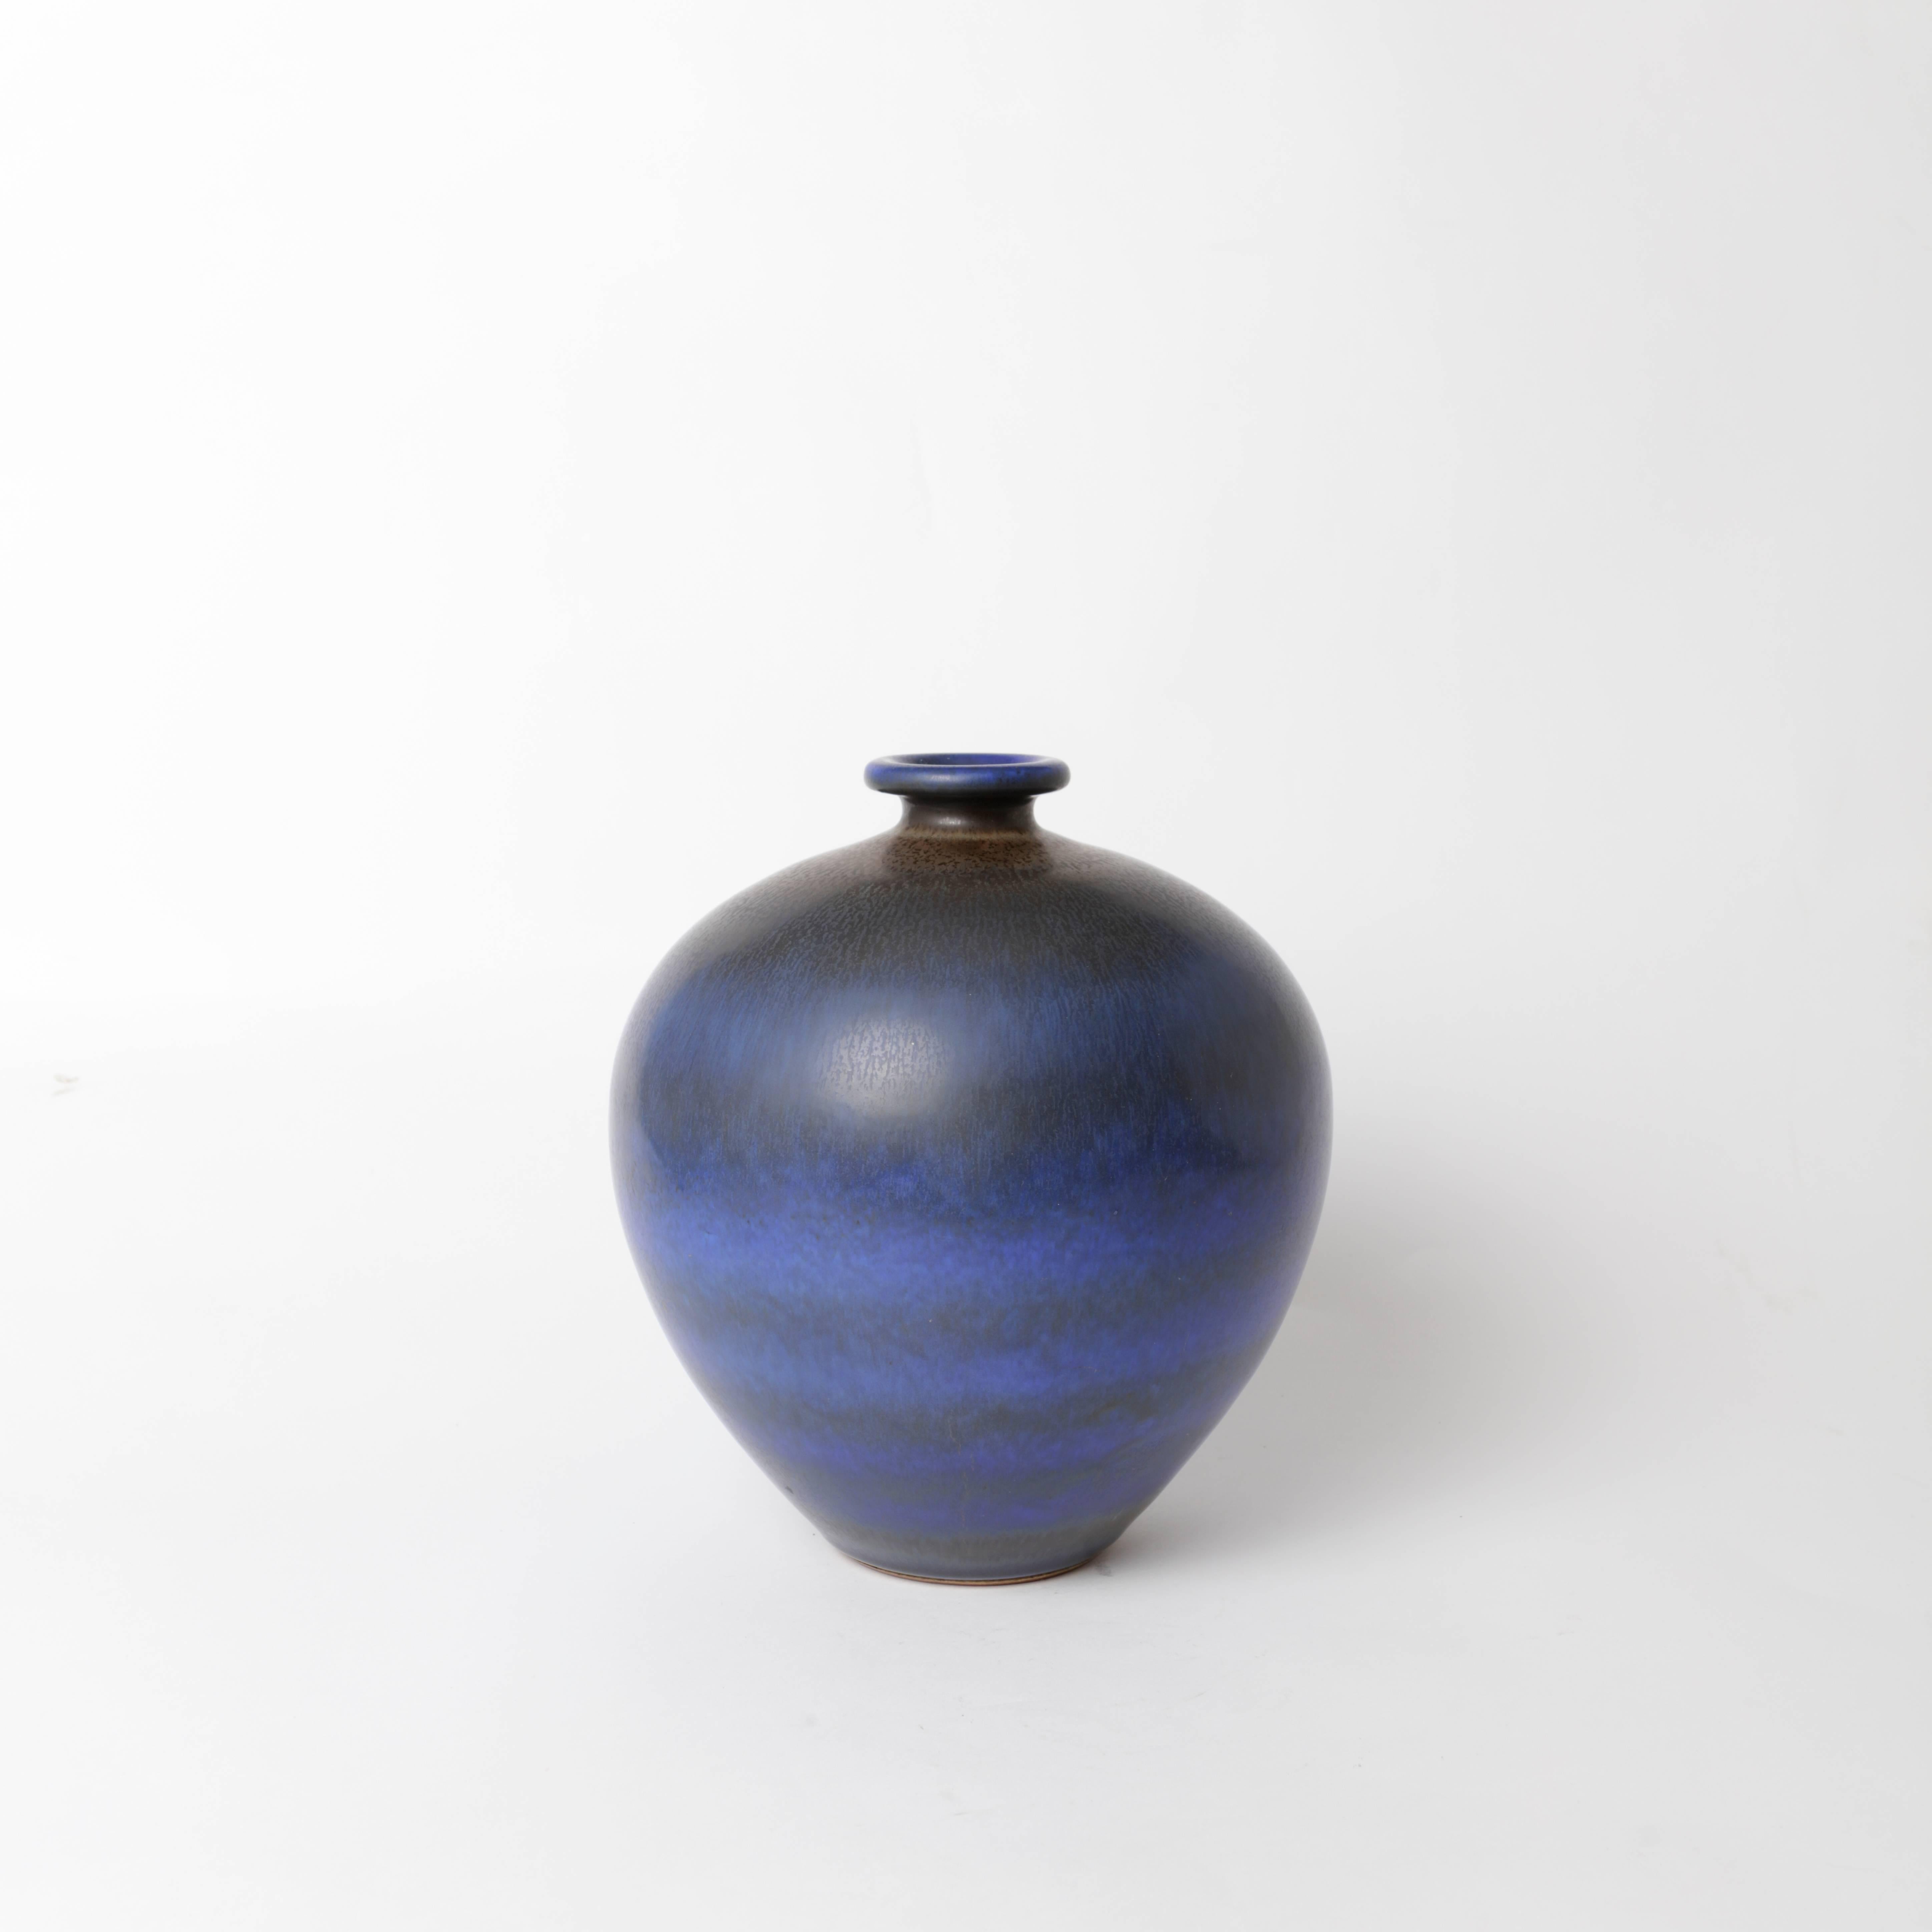 Unique stoneware vase by Berndt Friberg for Gustavsberg 1966 with harefur glaze.
Measure: Height 25 cm/9.8